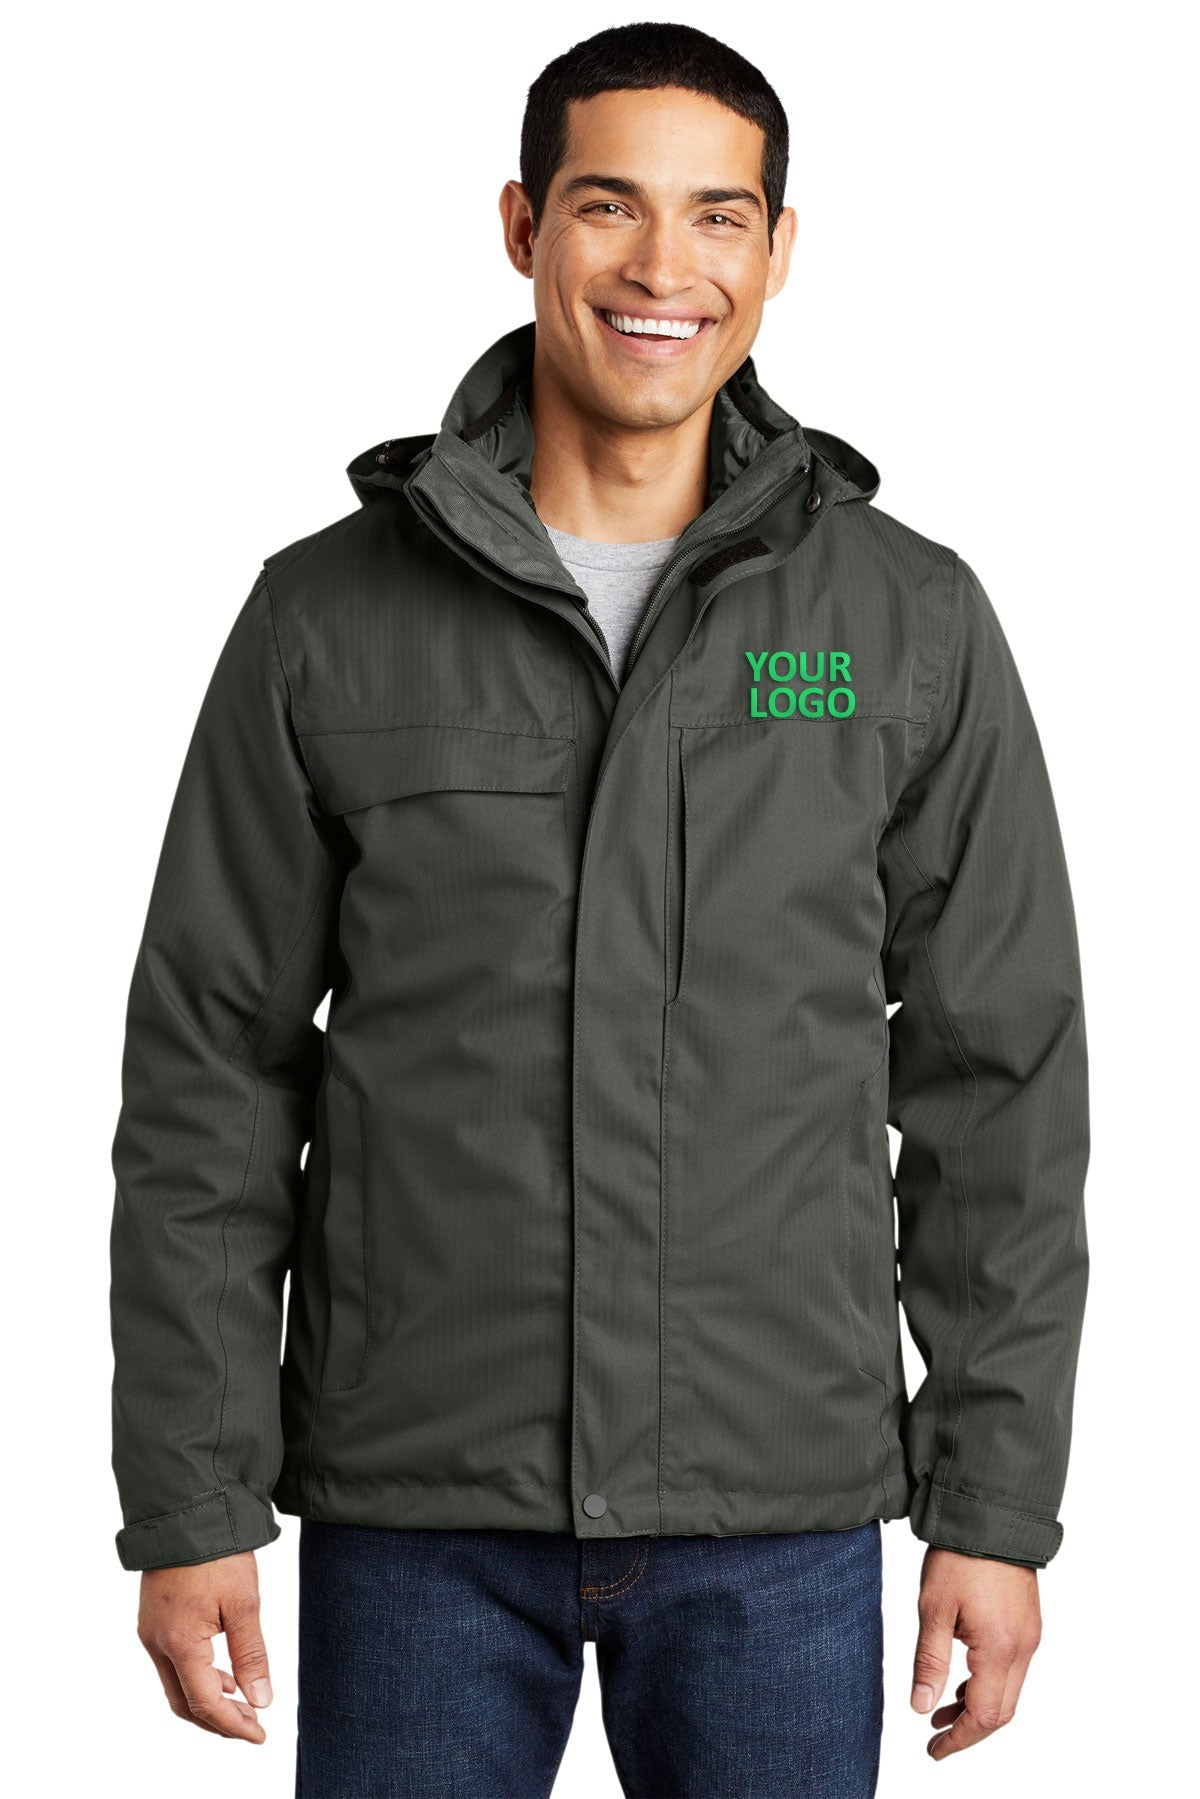 Port Authority Spruce Green J302 jacket company logo